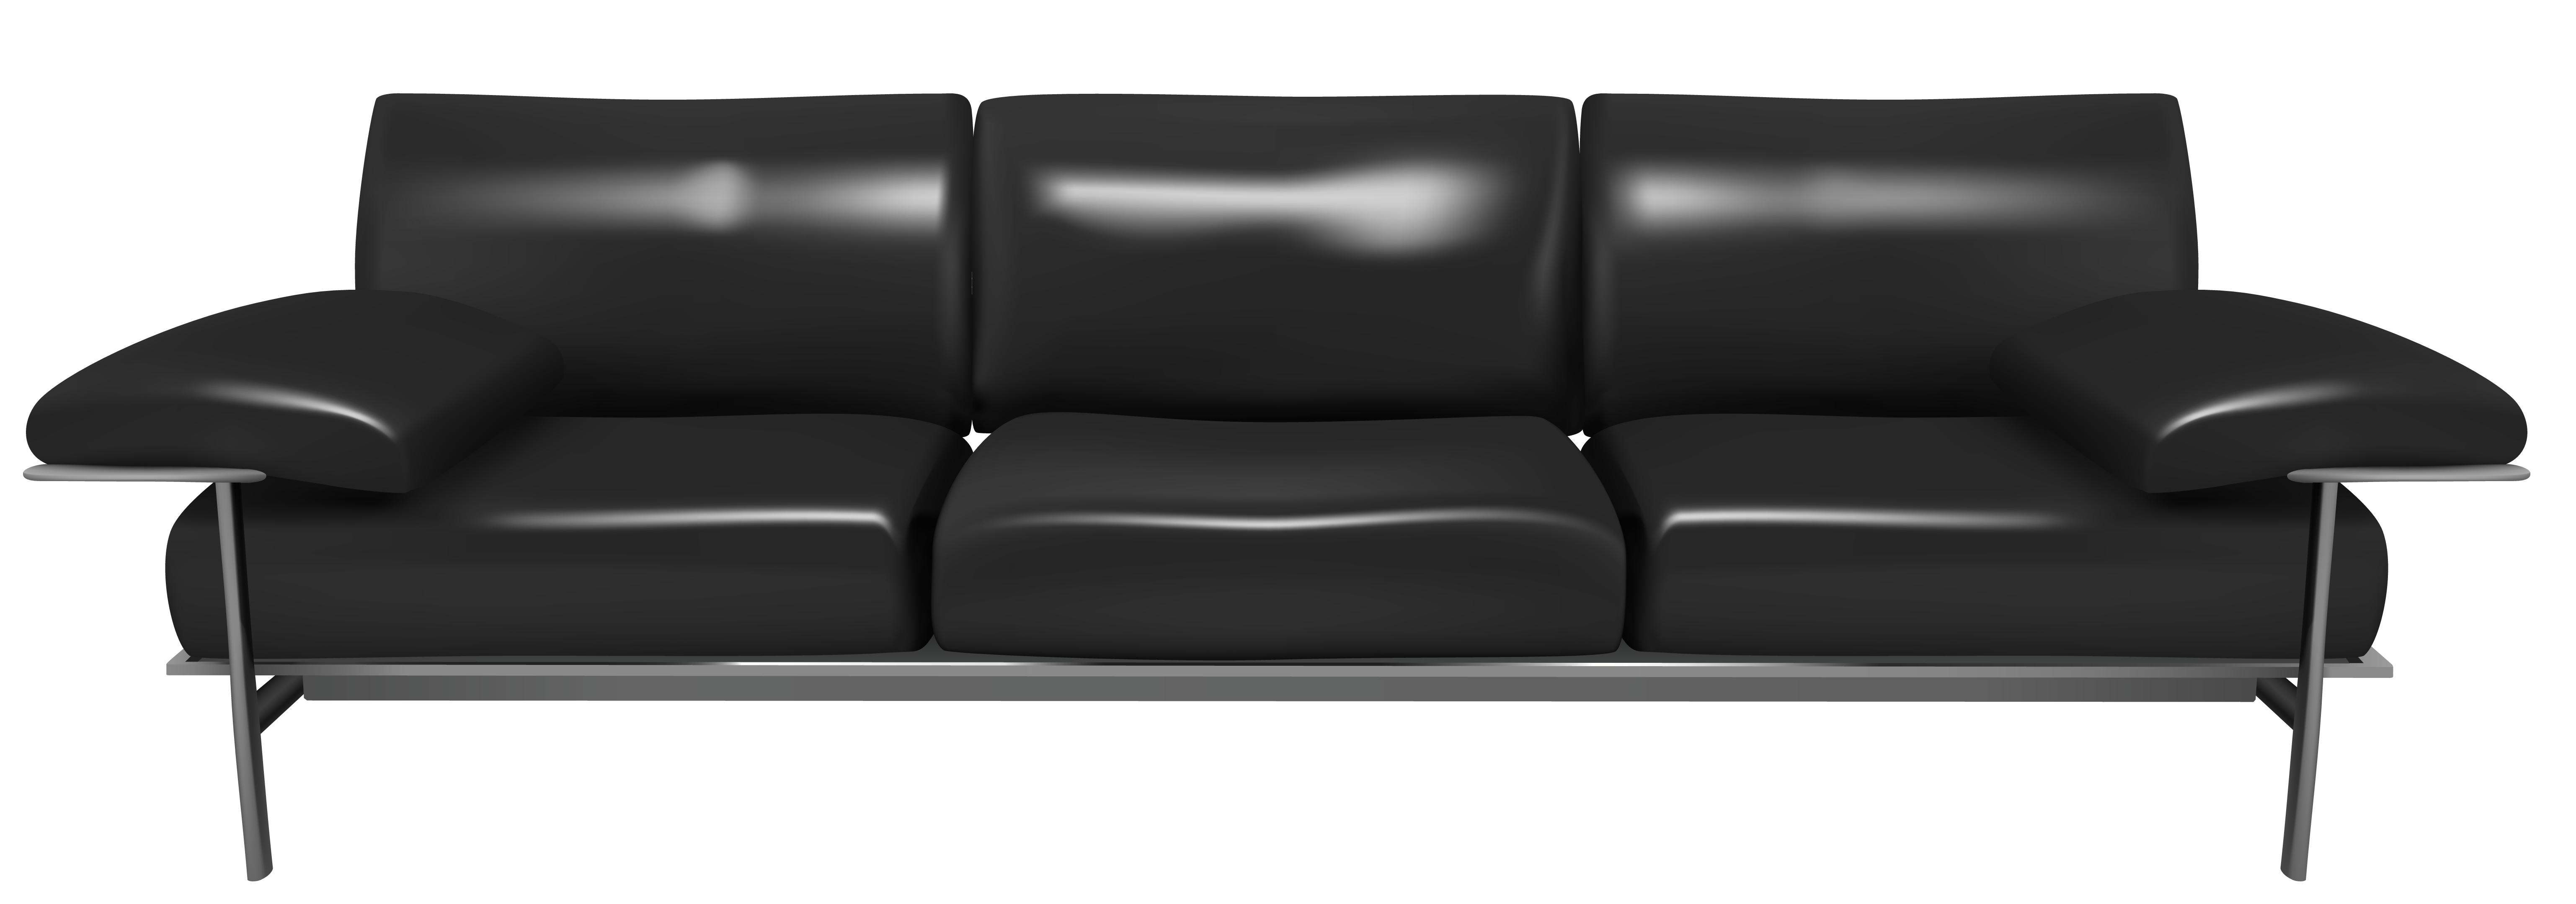 Transparent Black Couch PNG Clipart.